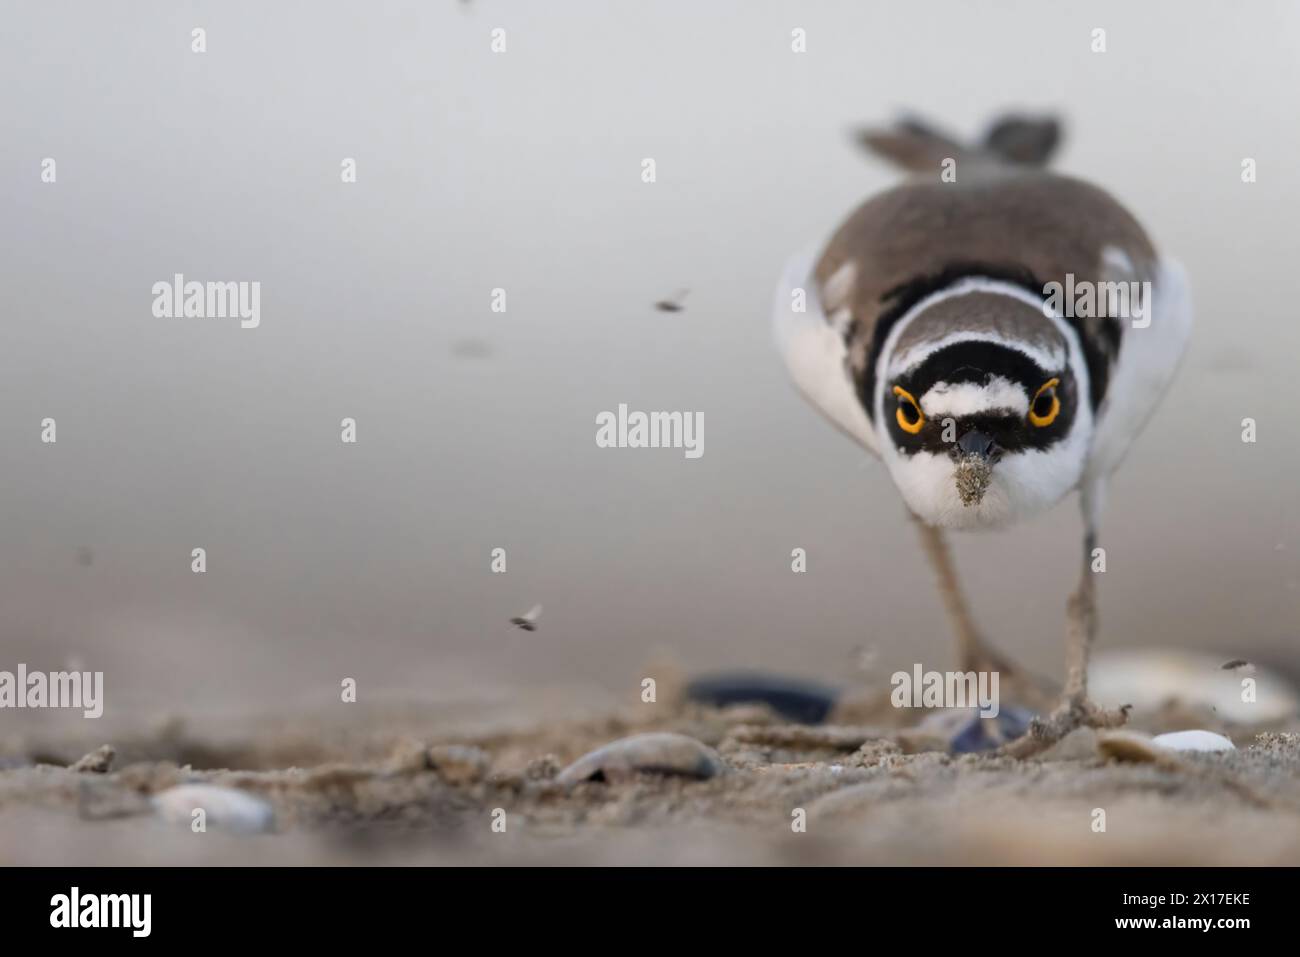 Watvögel oder Ufervögel, kleiner Ringpfeifer (Charadrius dubius) am Strand. Stockfoto